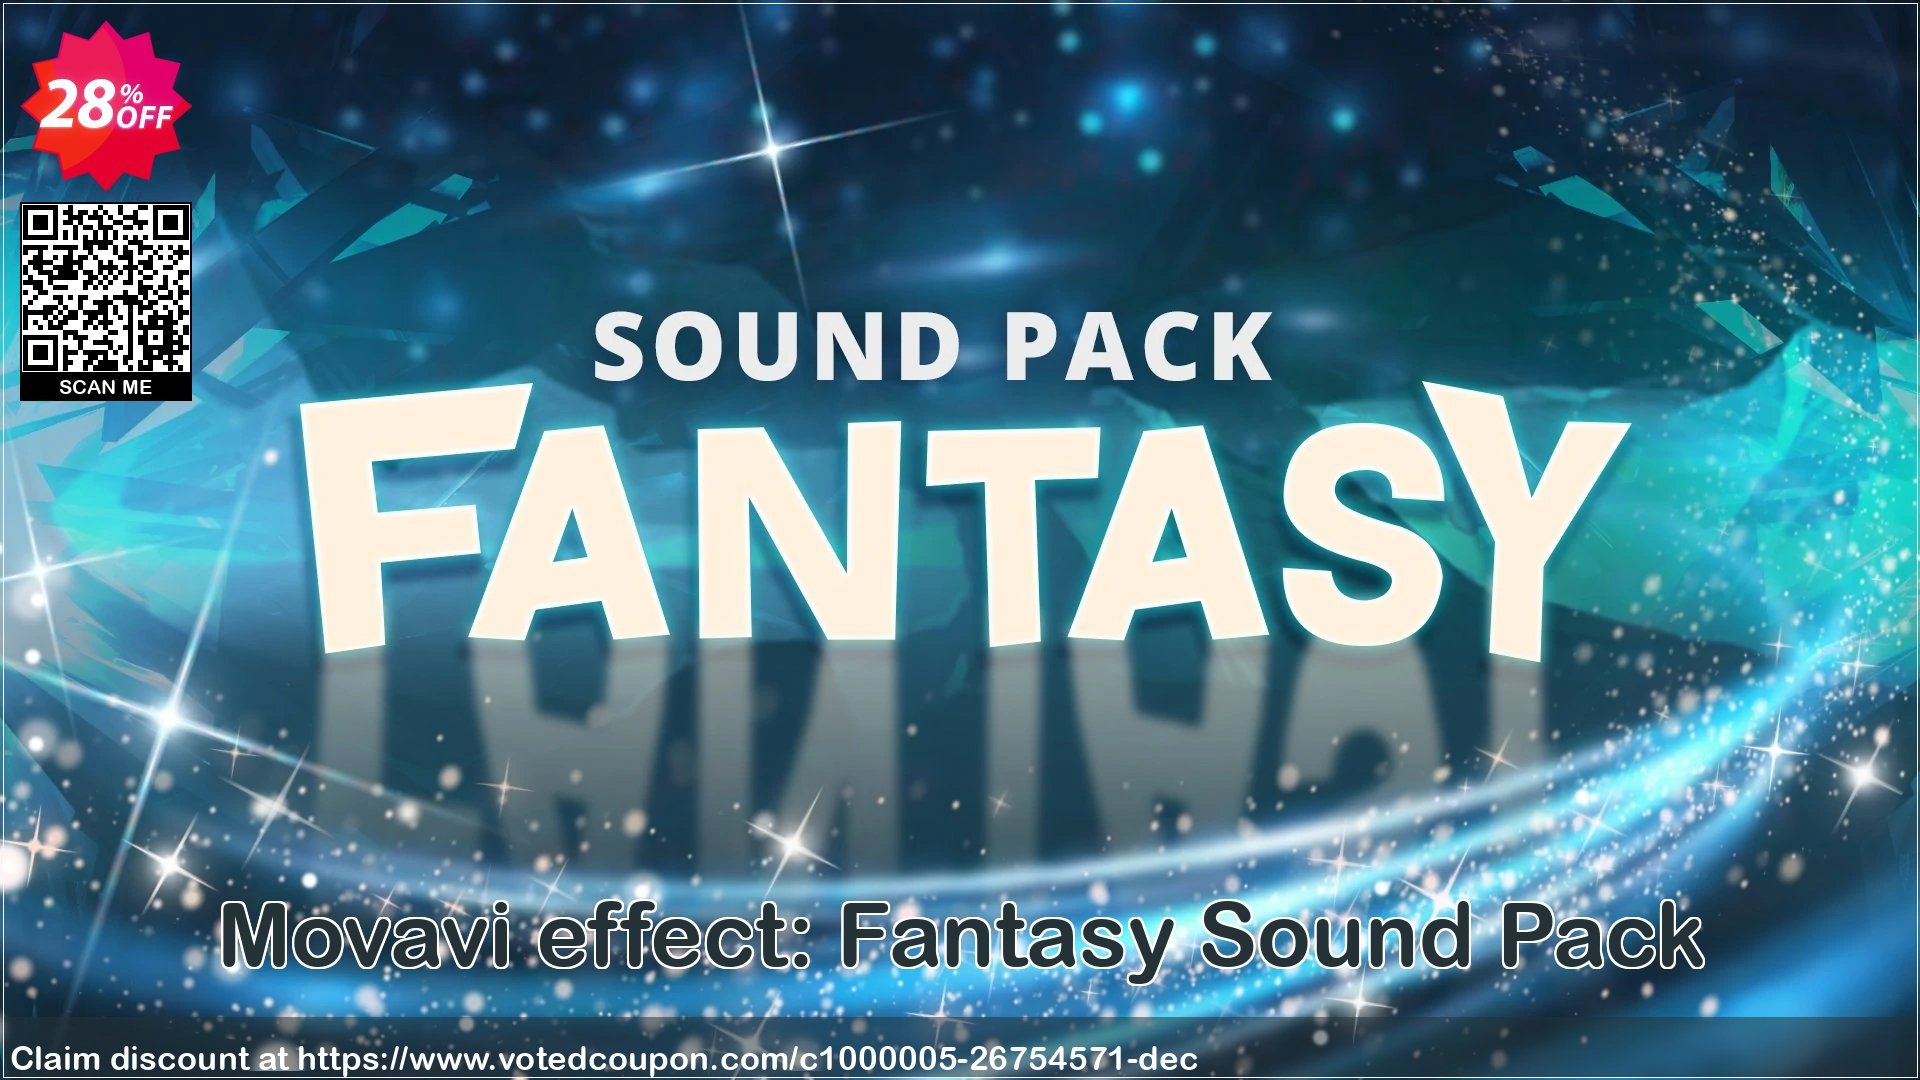 Movavi effect: Fantasy Sound Pack